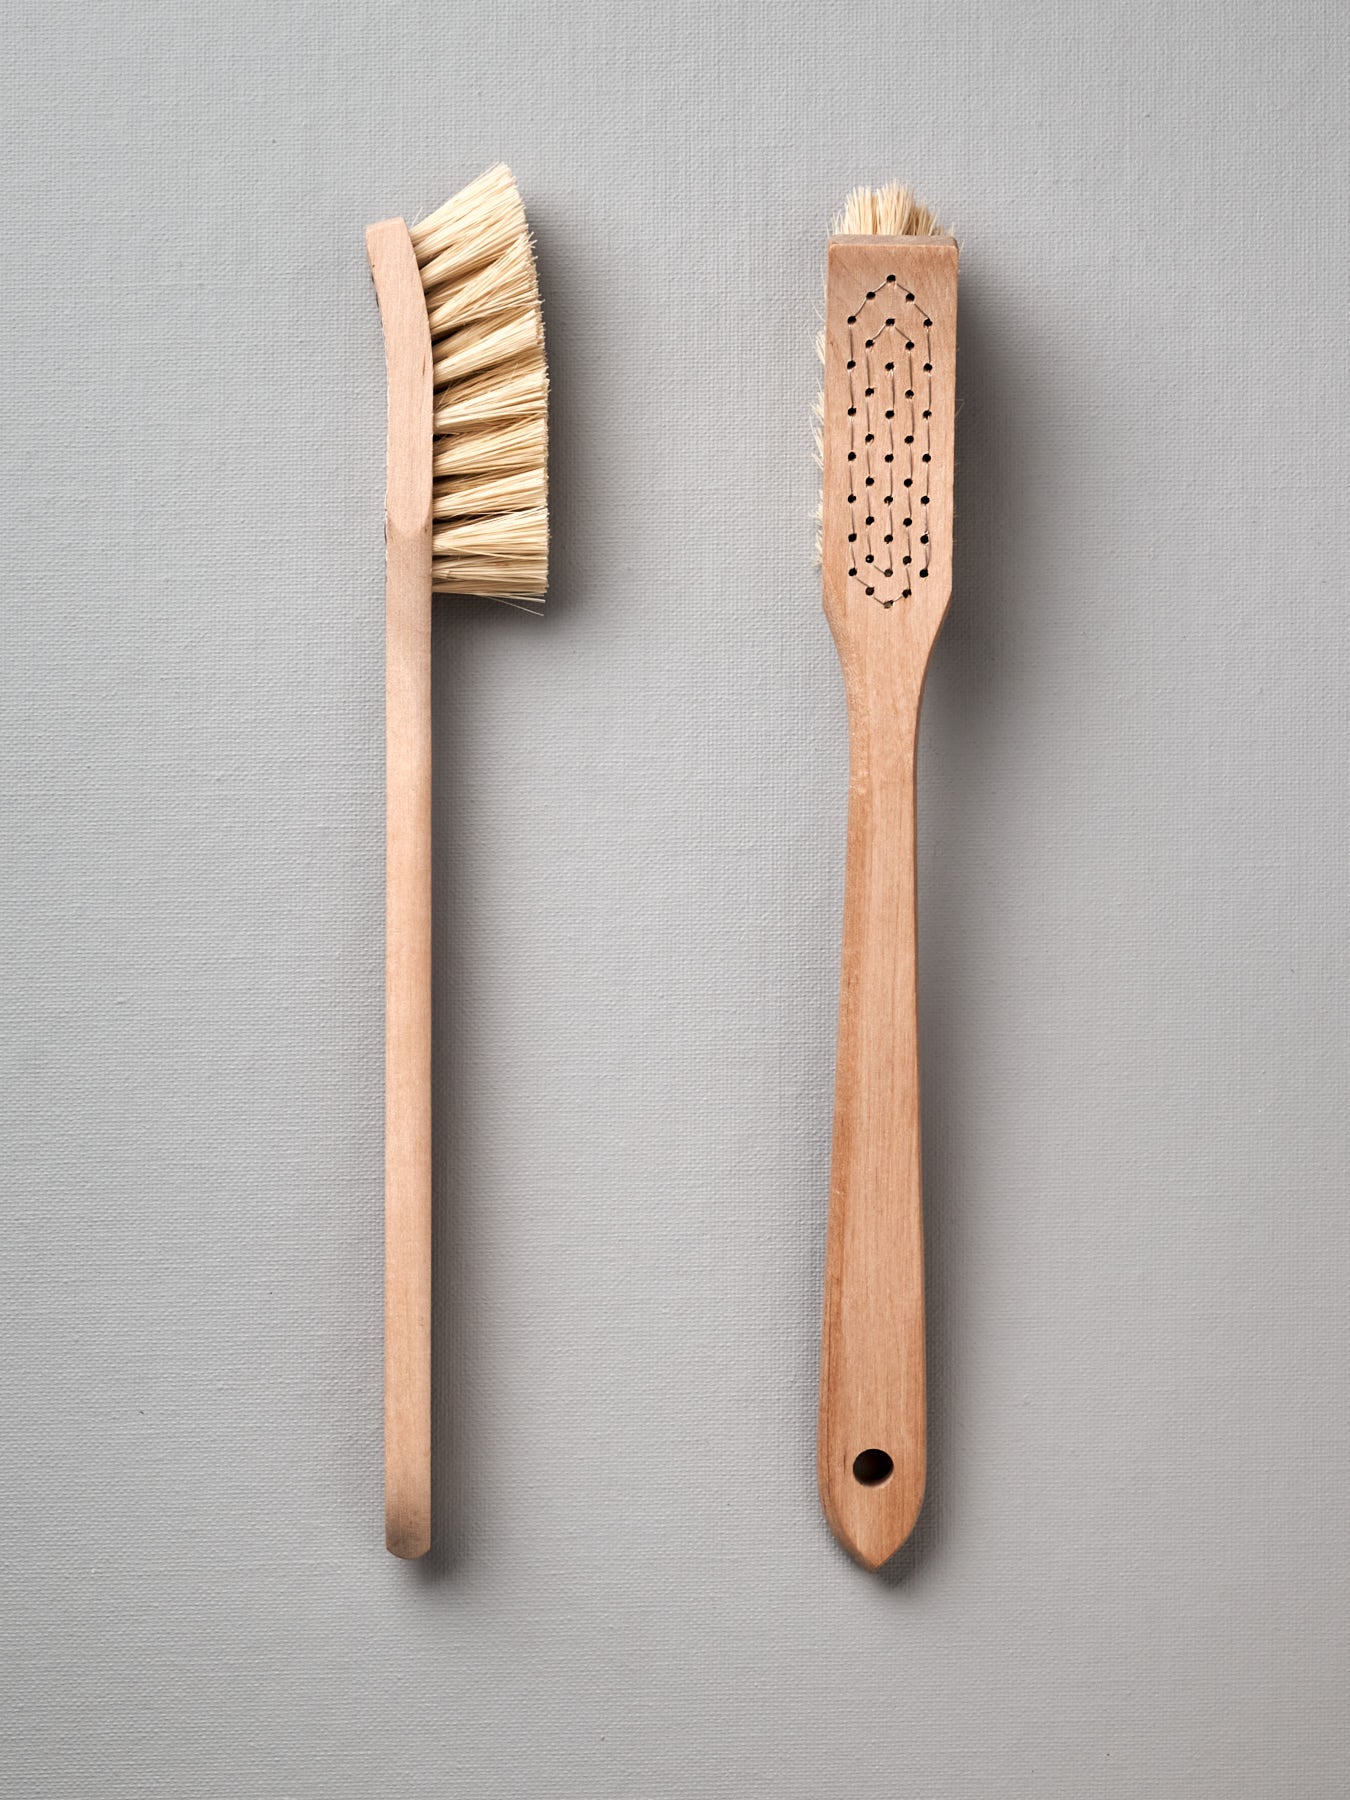 Two Iris Hantverk dish brushes on a grey background.